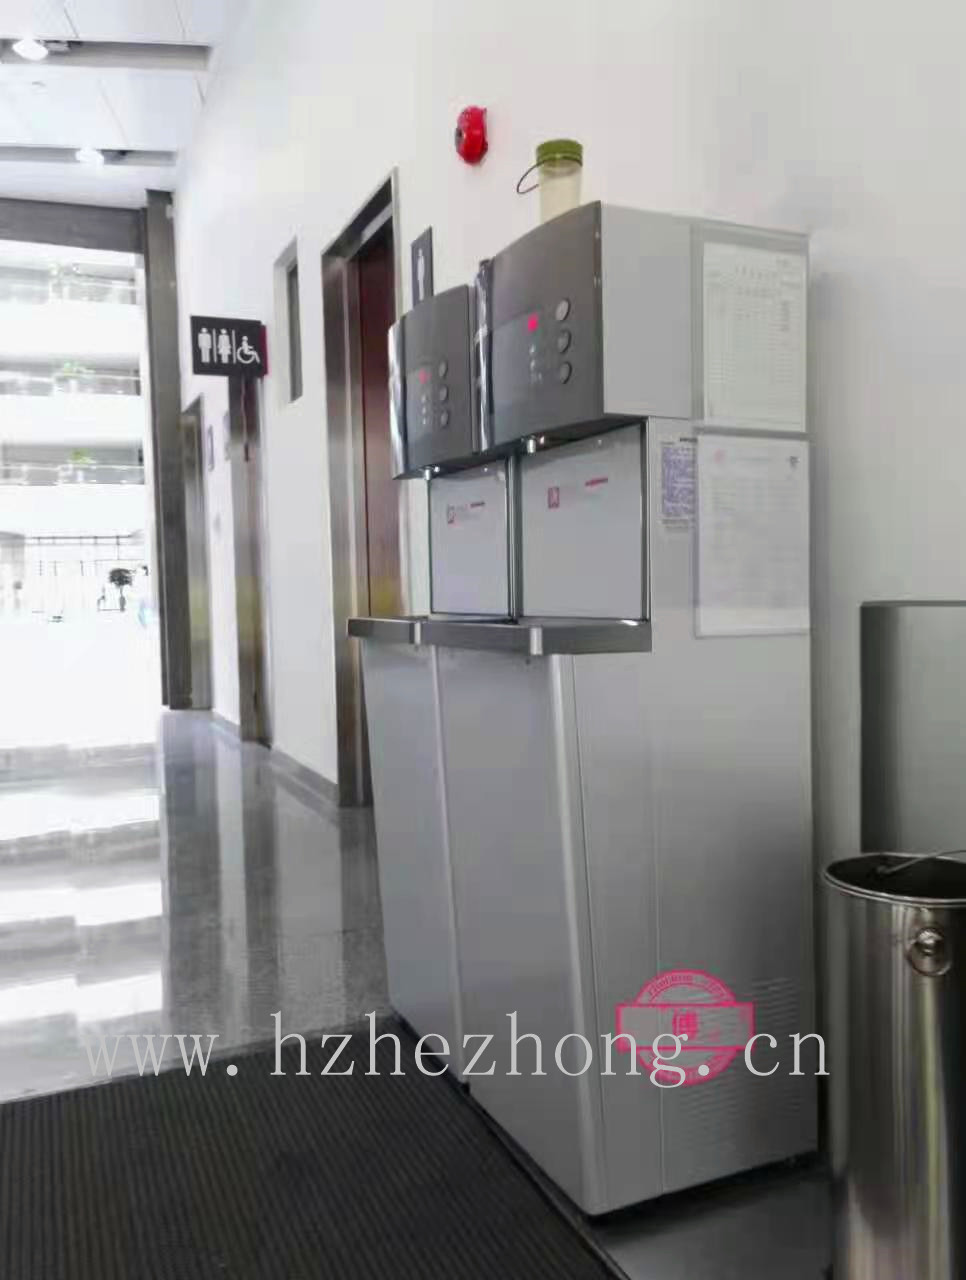 Peking University HSBC Business School uses ACUO brand water dispenser